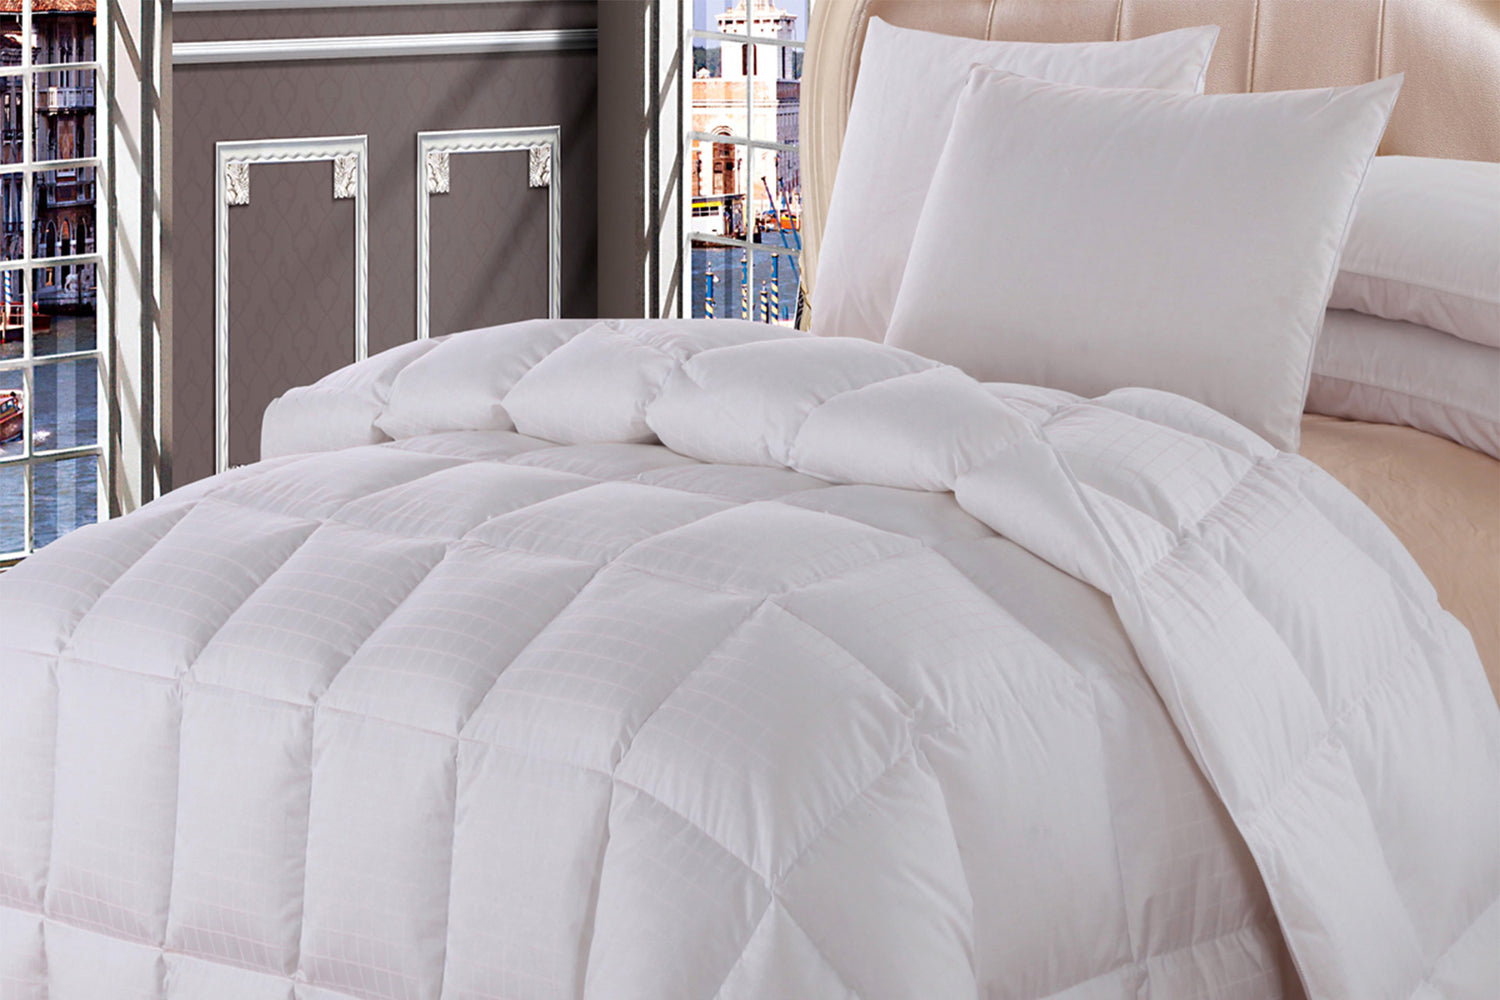 Royal Hotel Comforter Review (White Siberian Goose Down)